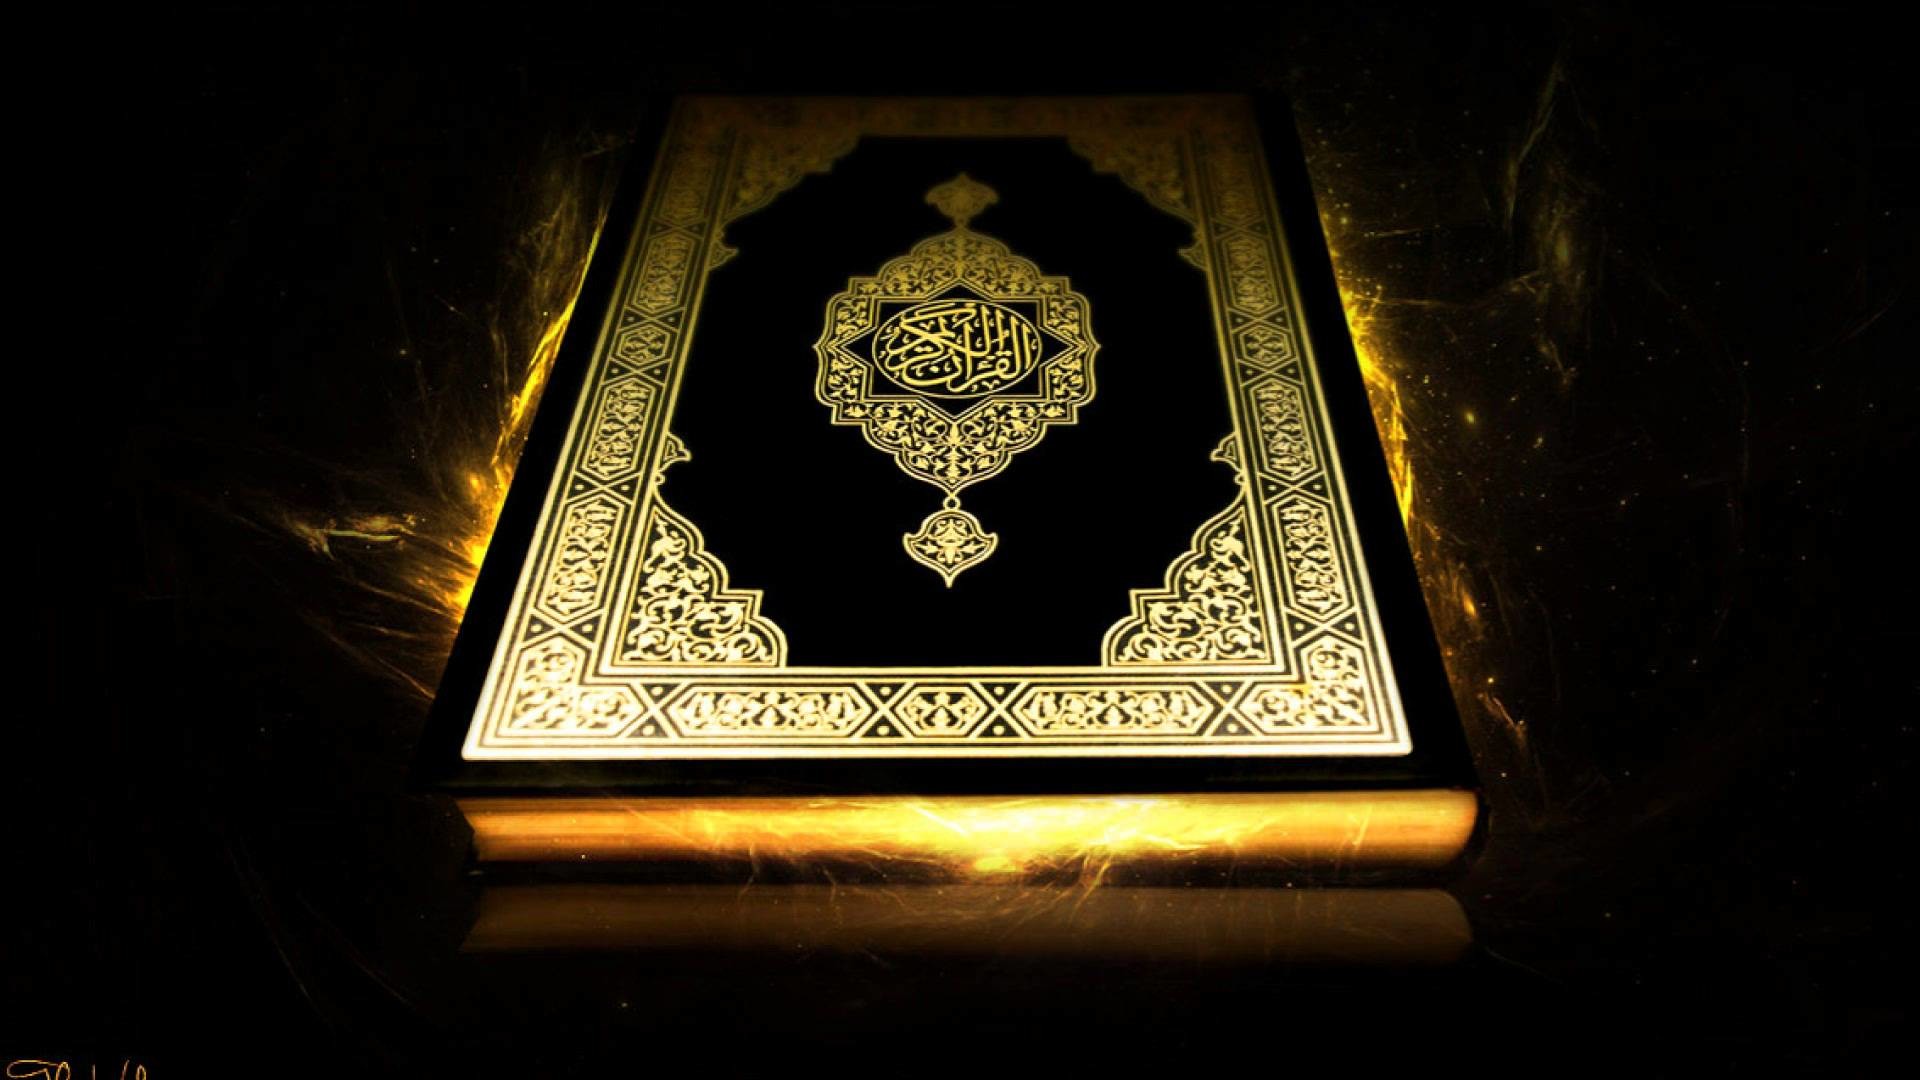 Holy Quran Wallpaper